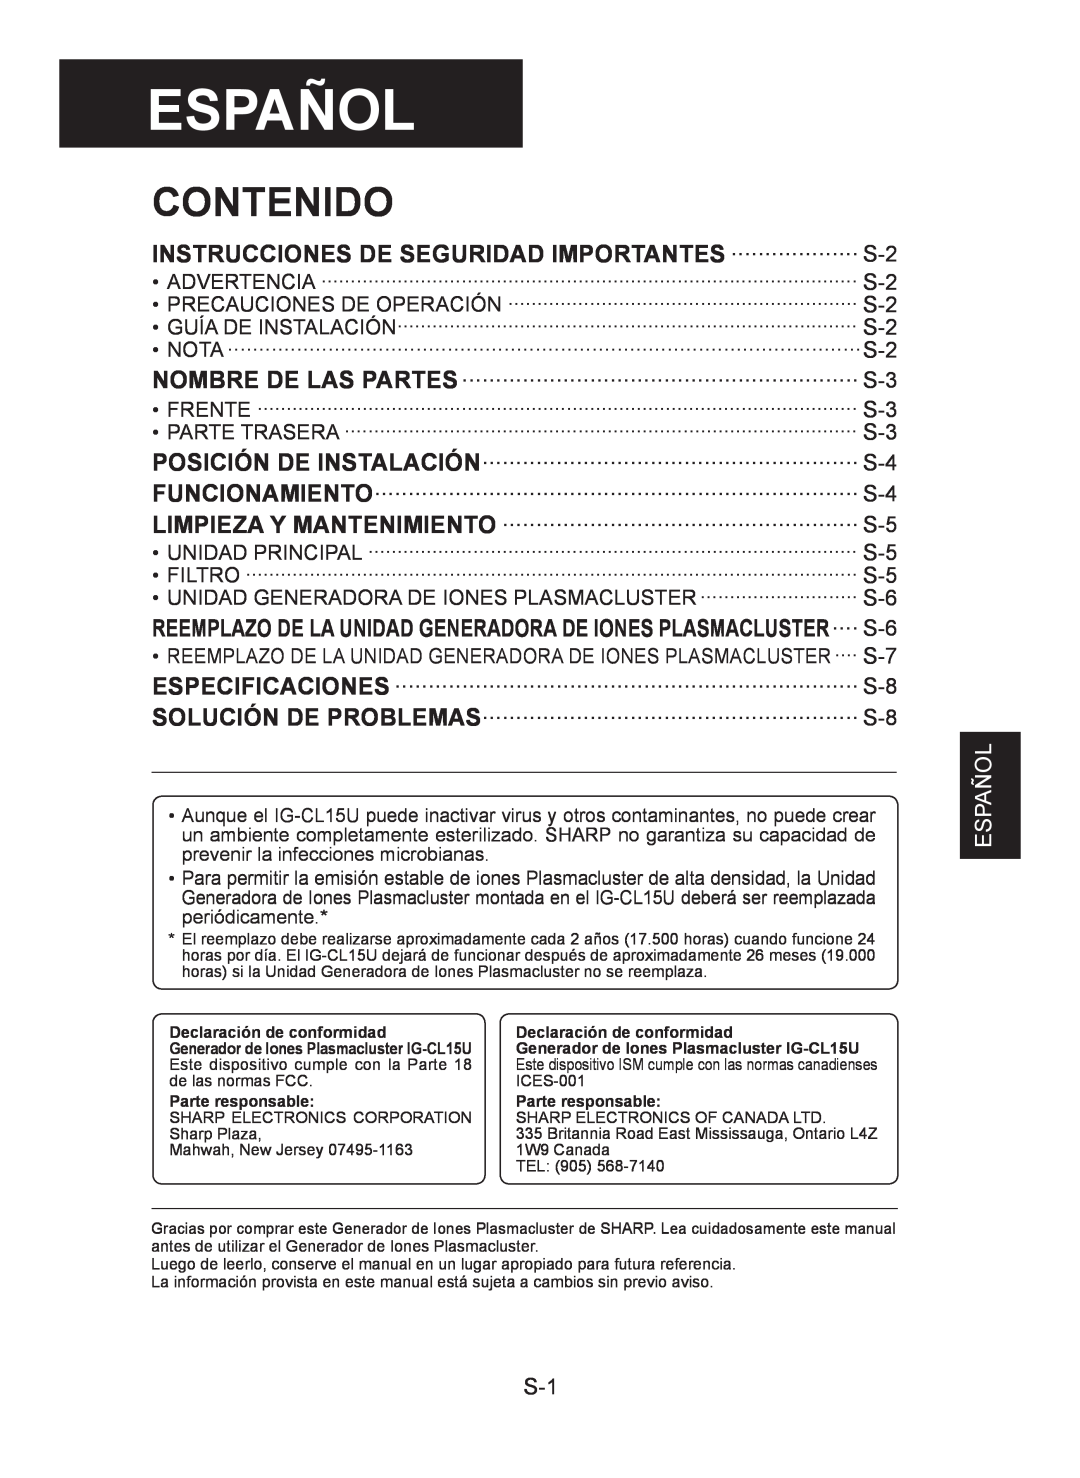 Sharp IG-CL15U operation manual Español, Contenido 